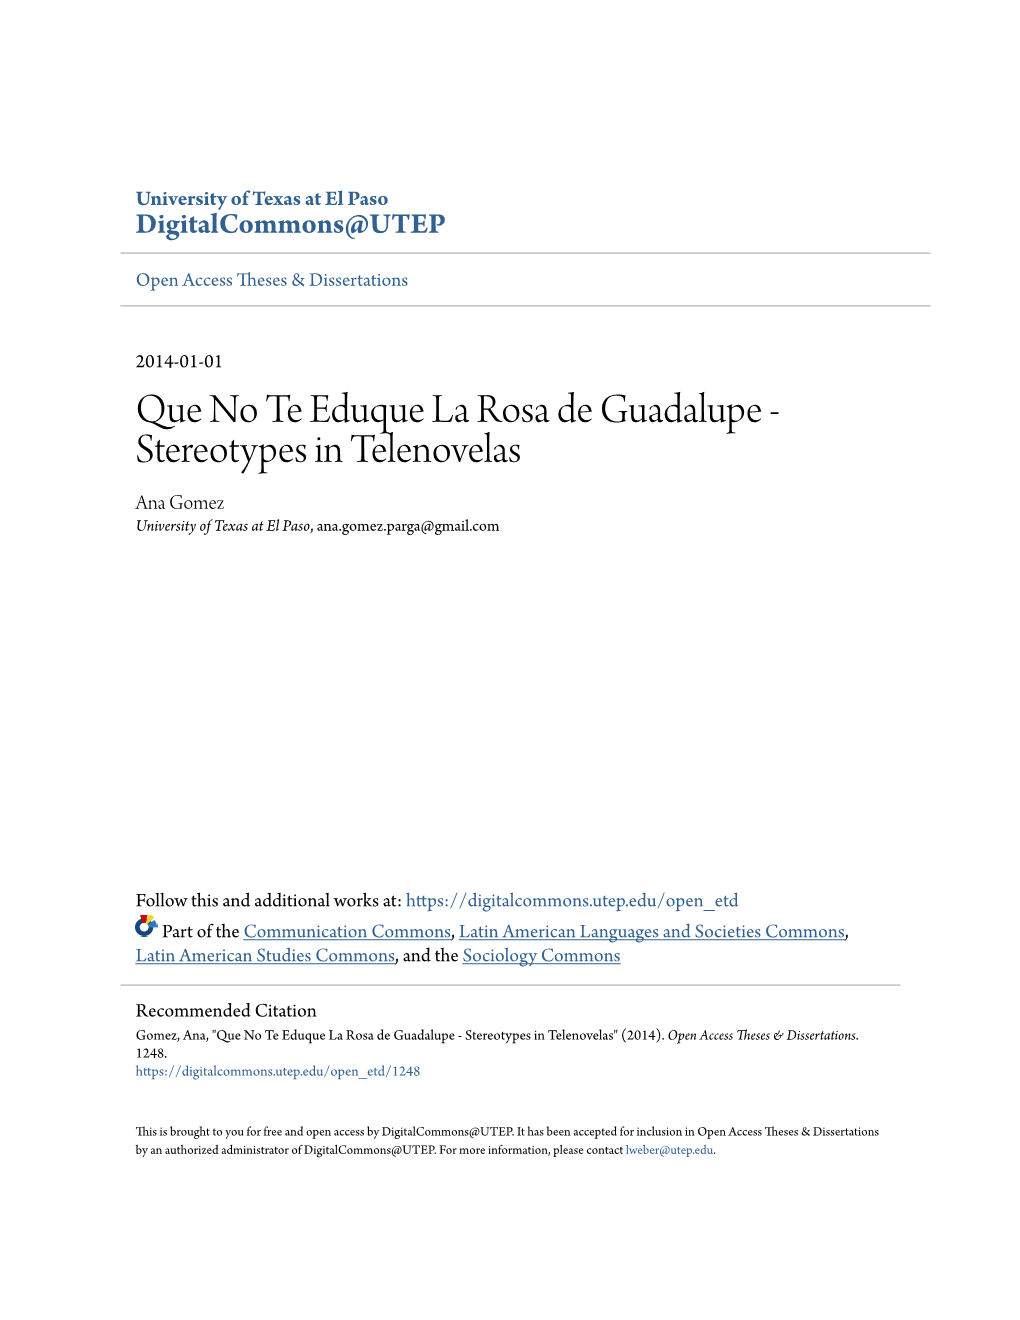 Que No Te Eduque La Rosa De Guadalupe - Stereotypes in Telenovelas Ana Gomez University of Texas at El Paso, Ana.Gomez.Parga@Gmail.Com